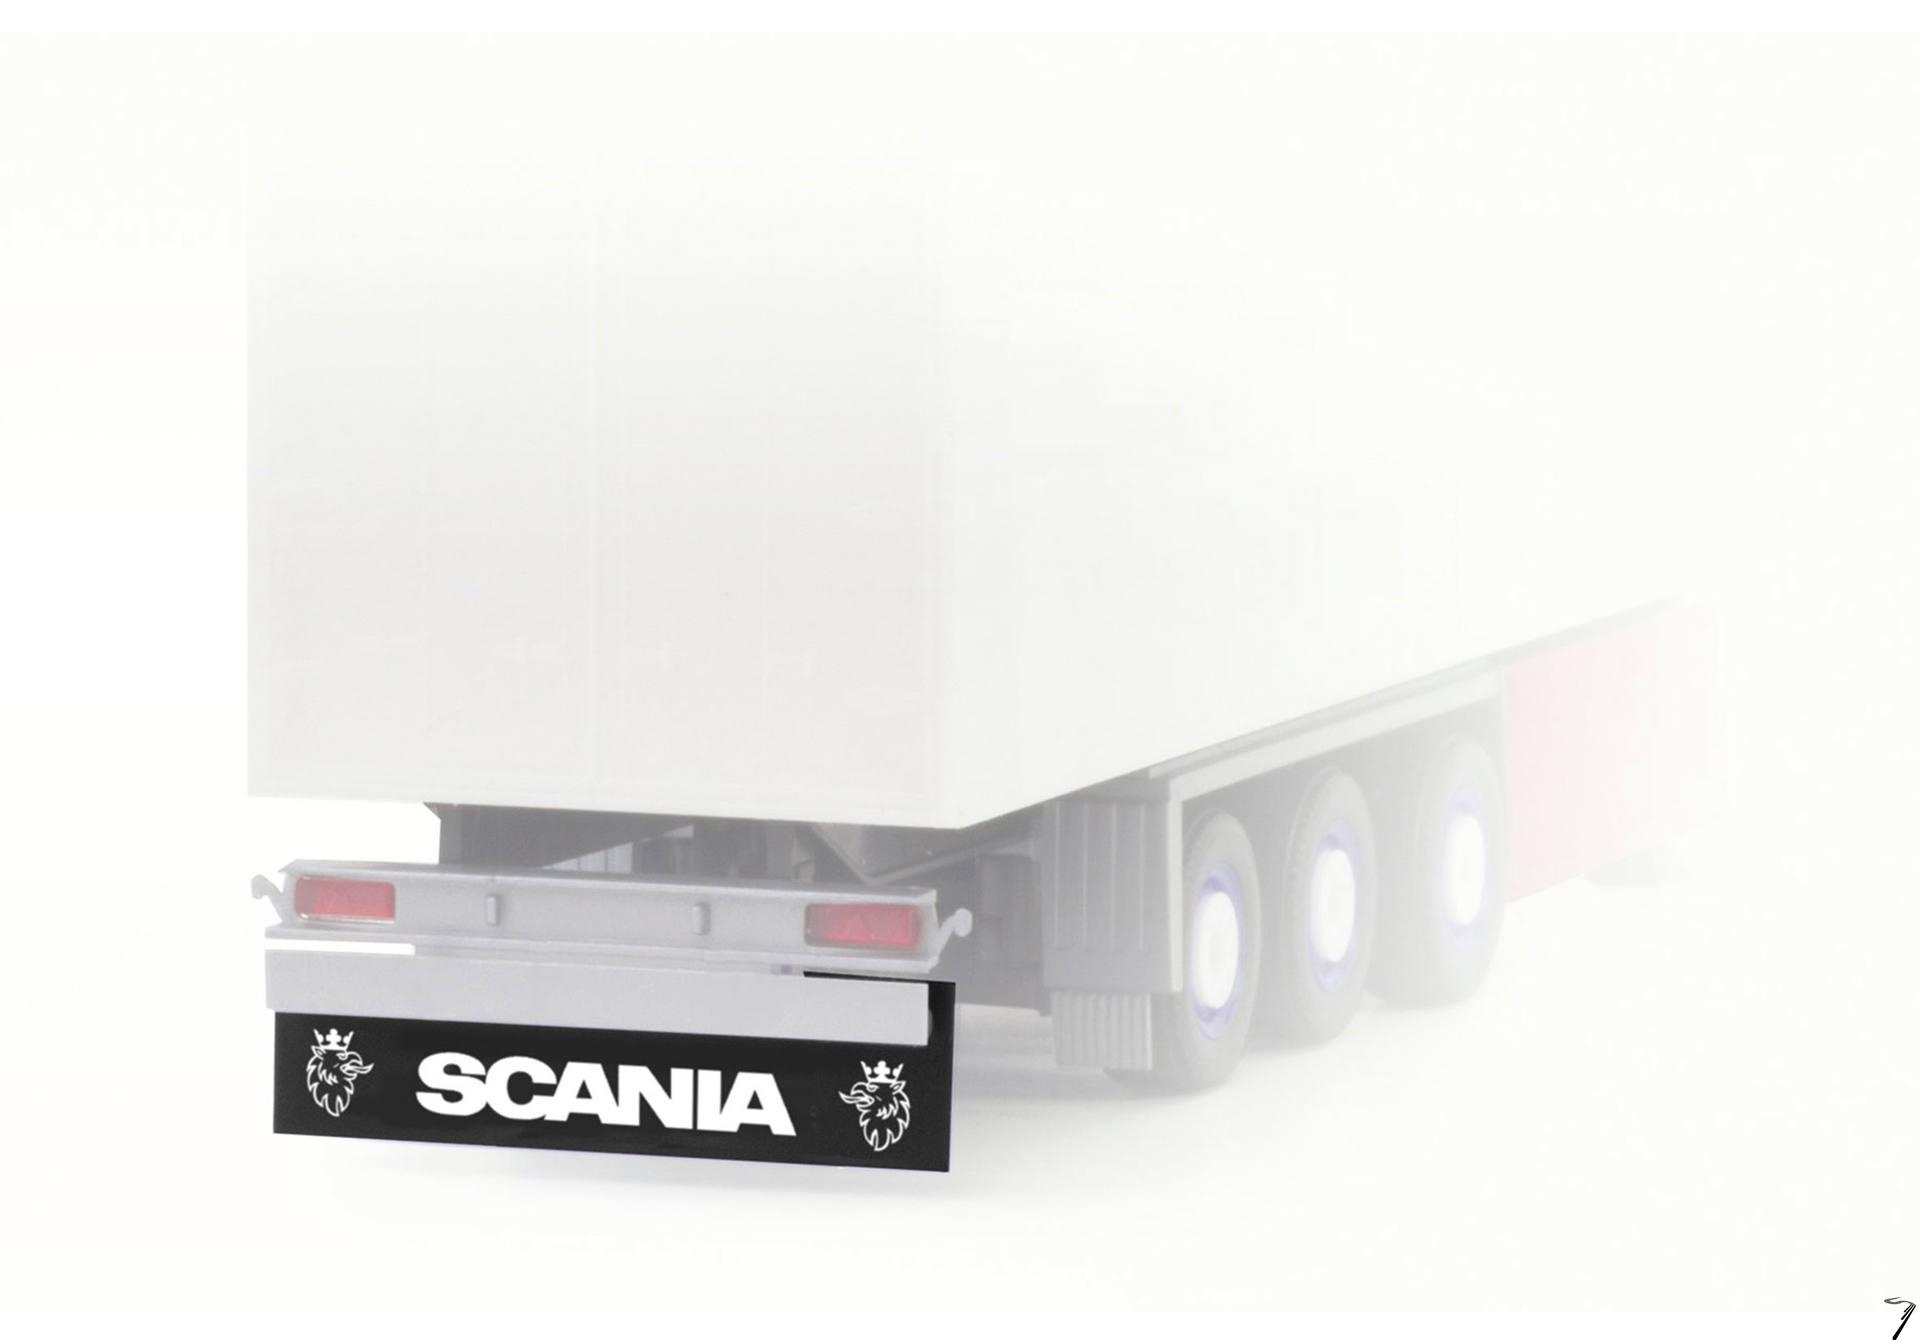 Scania . Flap arrire Scania avec logo - 8 pices 1/87